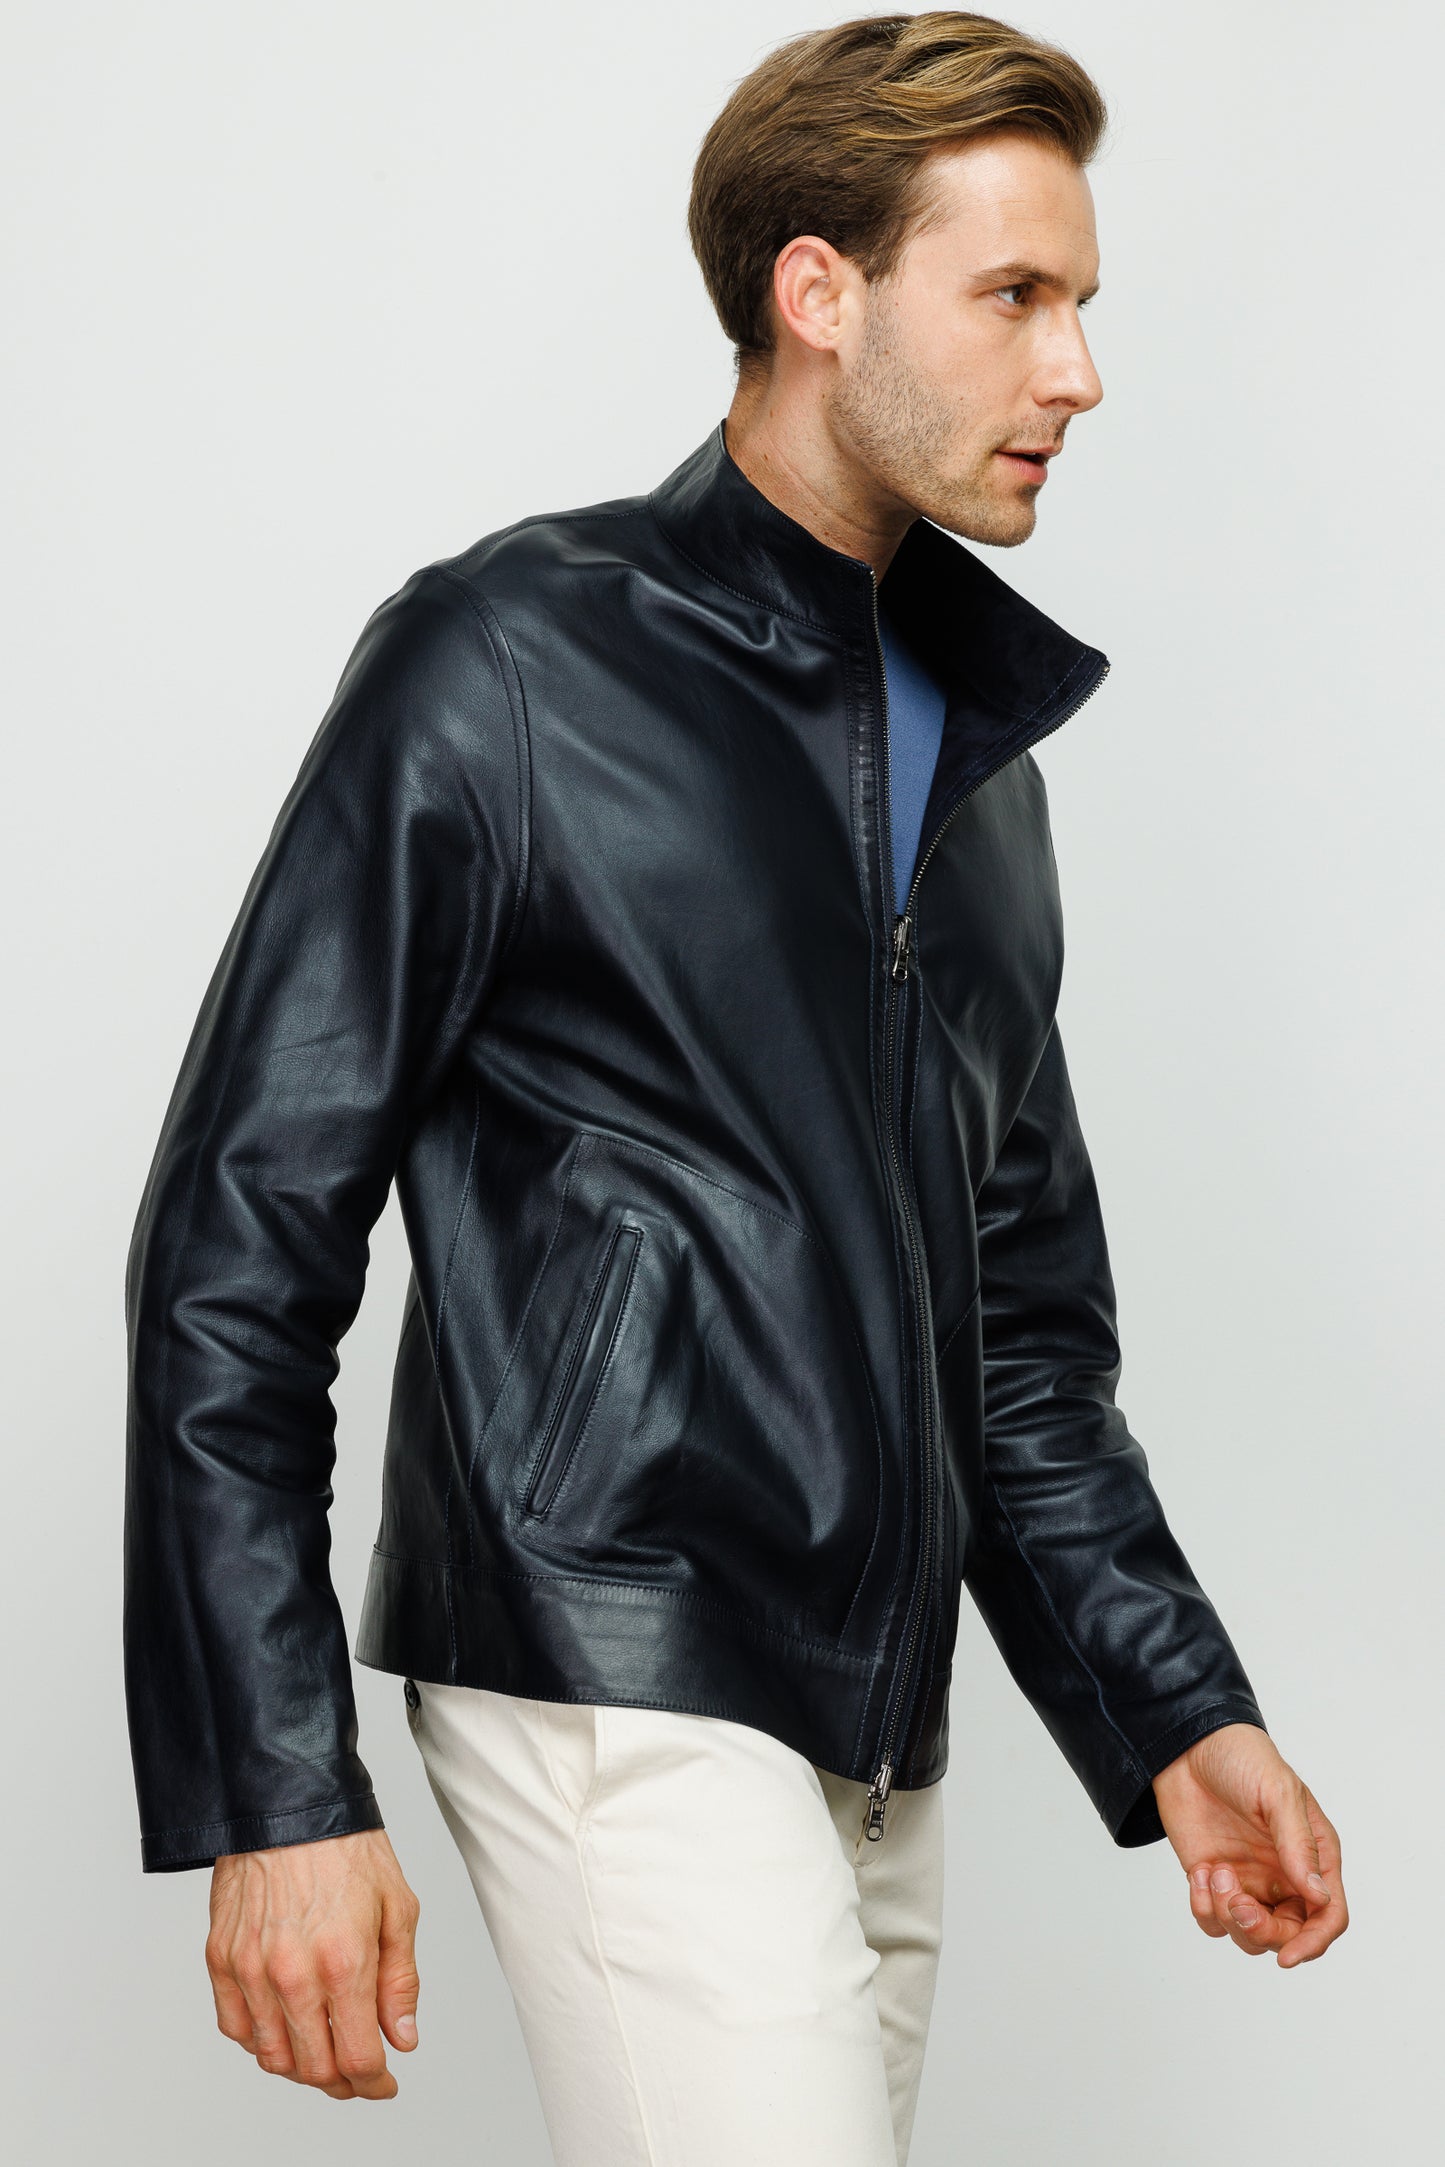 The Del Rio Leather Men Jacket